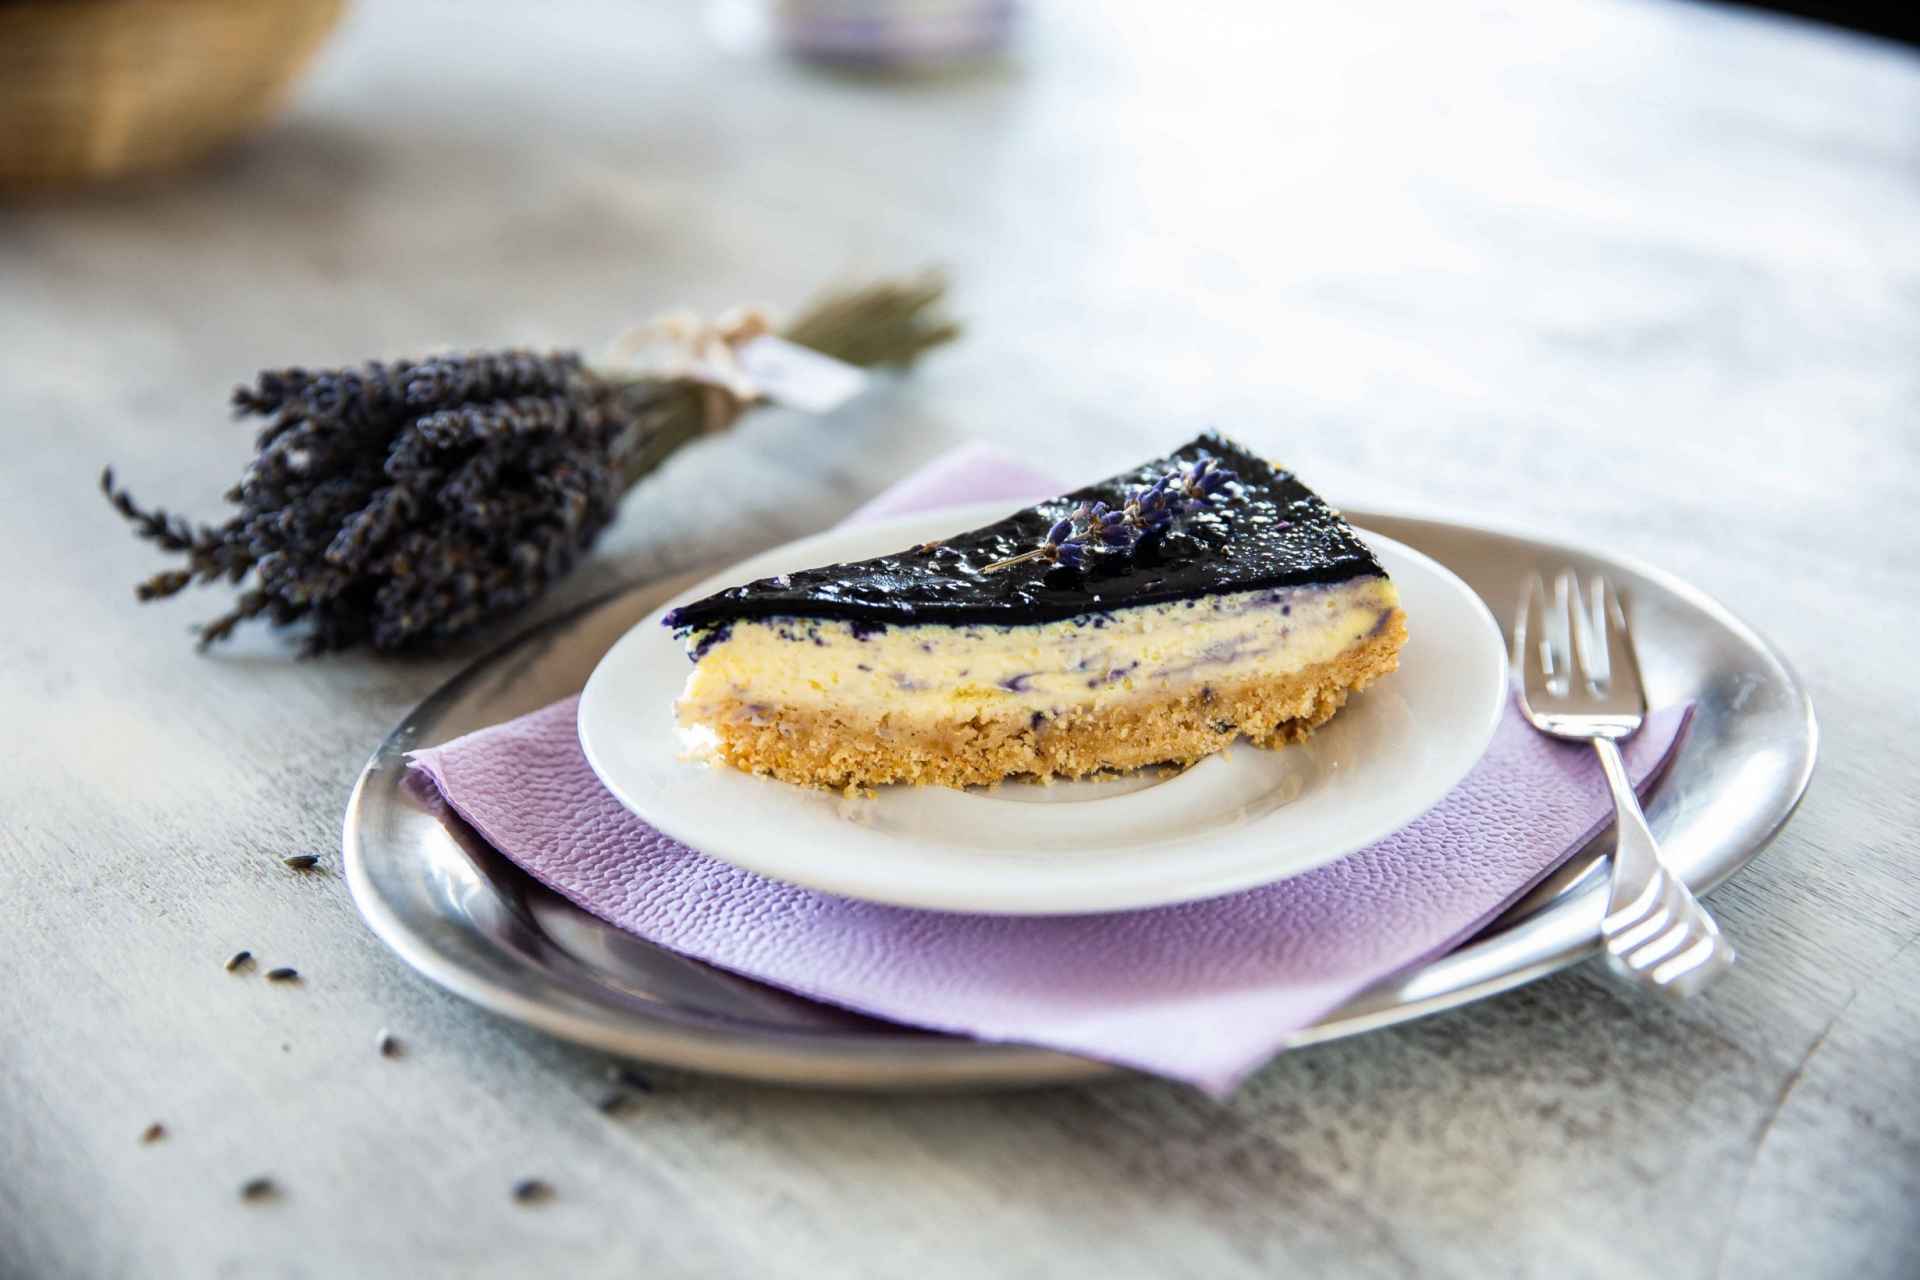 Lavender Cheese Cake (photo credit: Daniel Schulz)